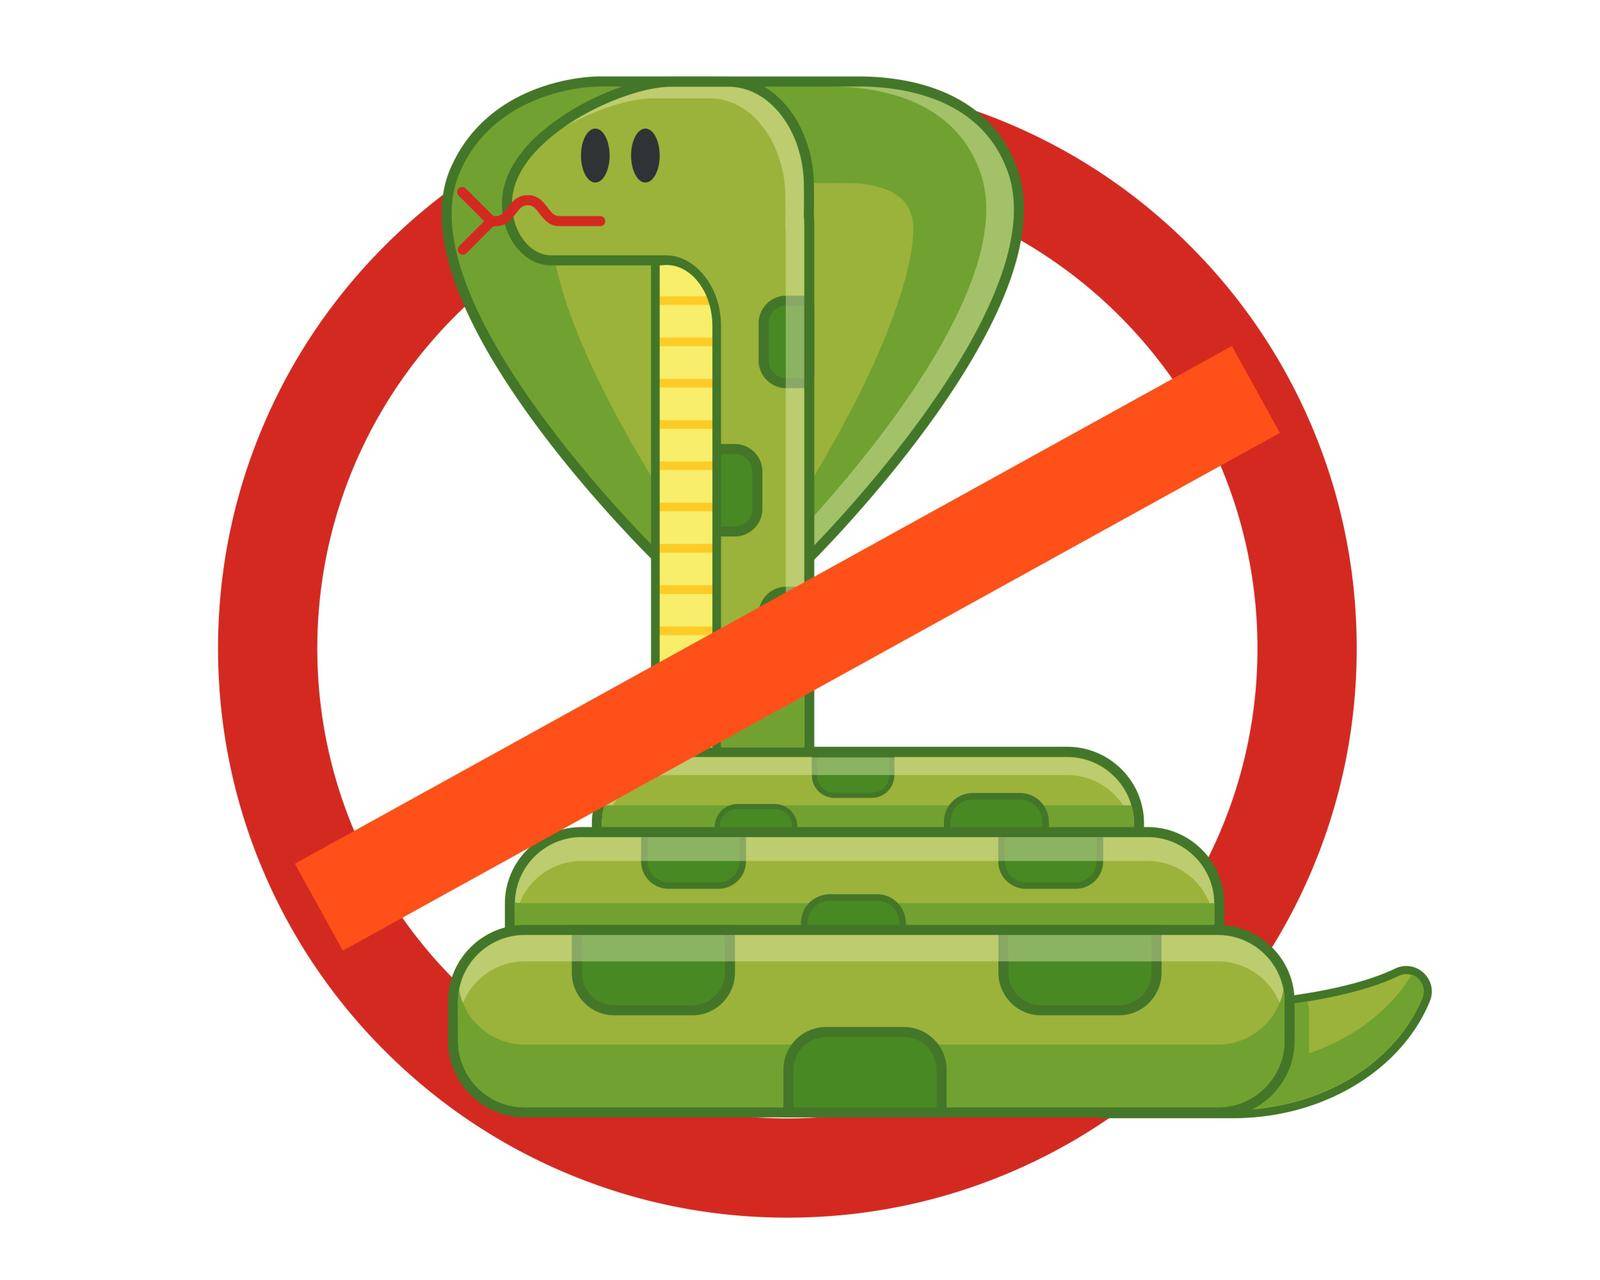 ban snakes. definition of toxic hazard. antidote to bites. by PlutusART